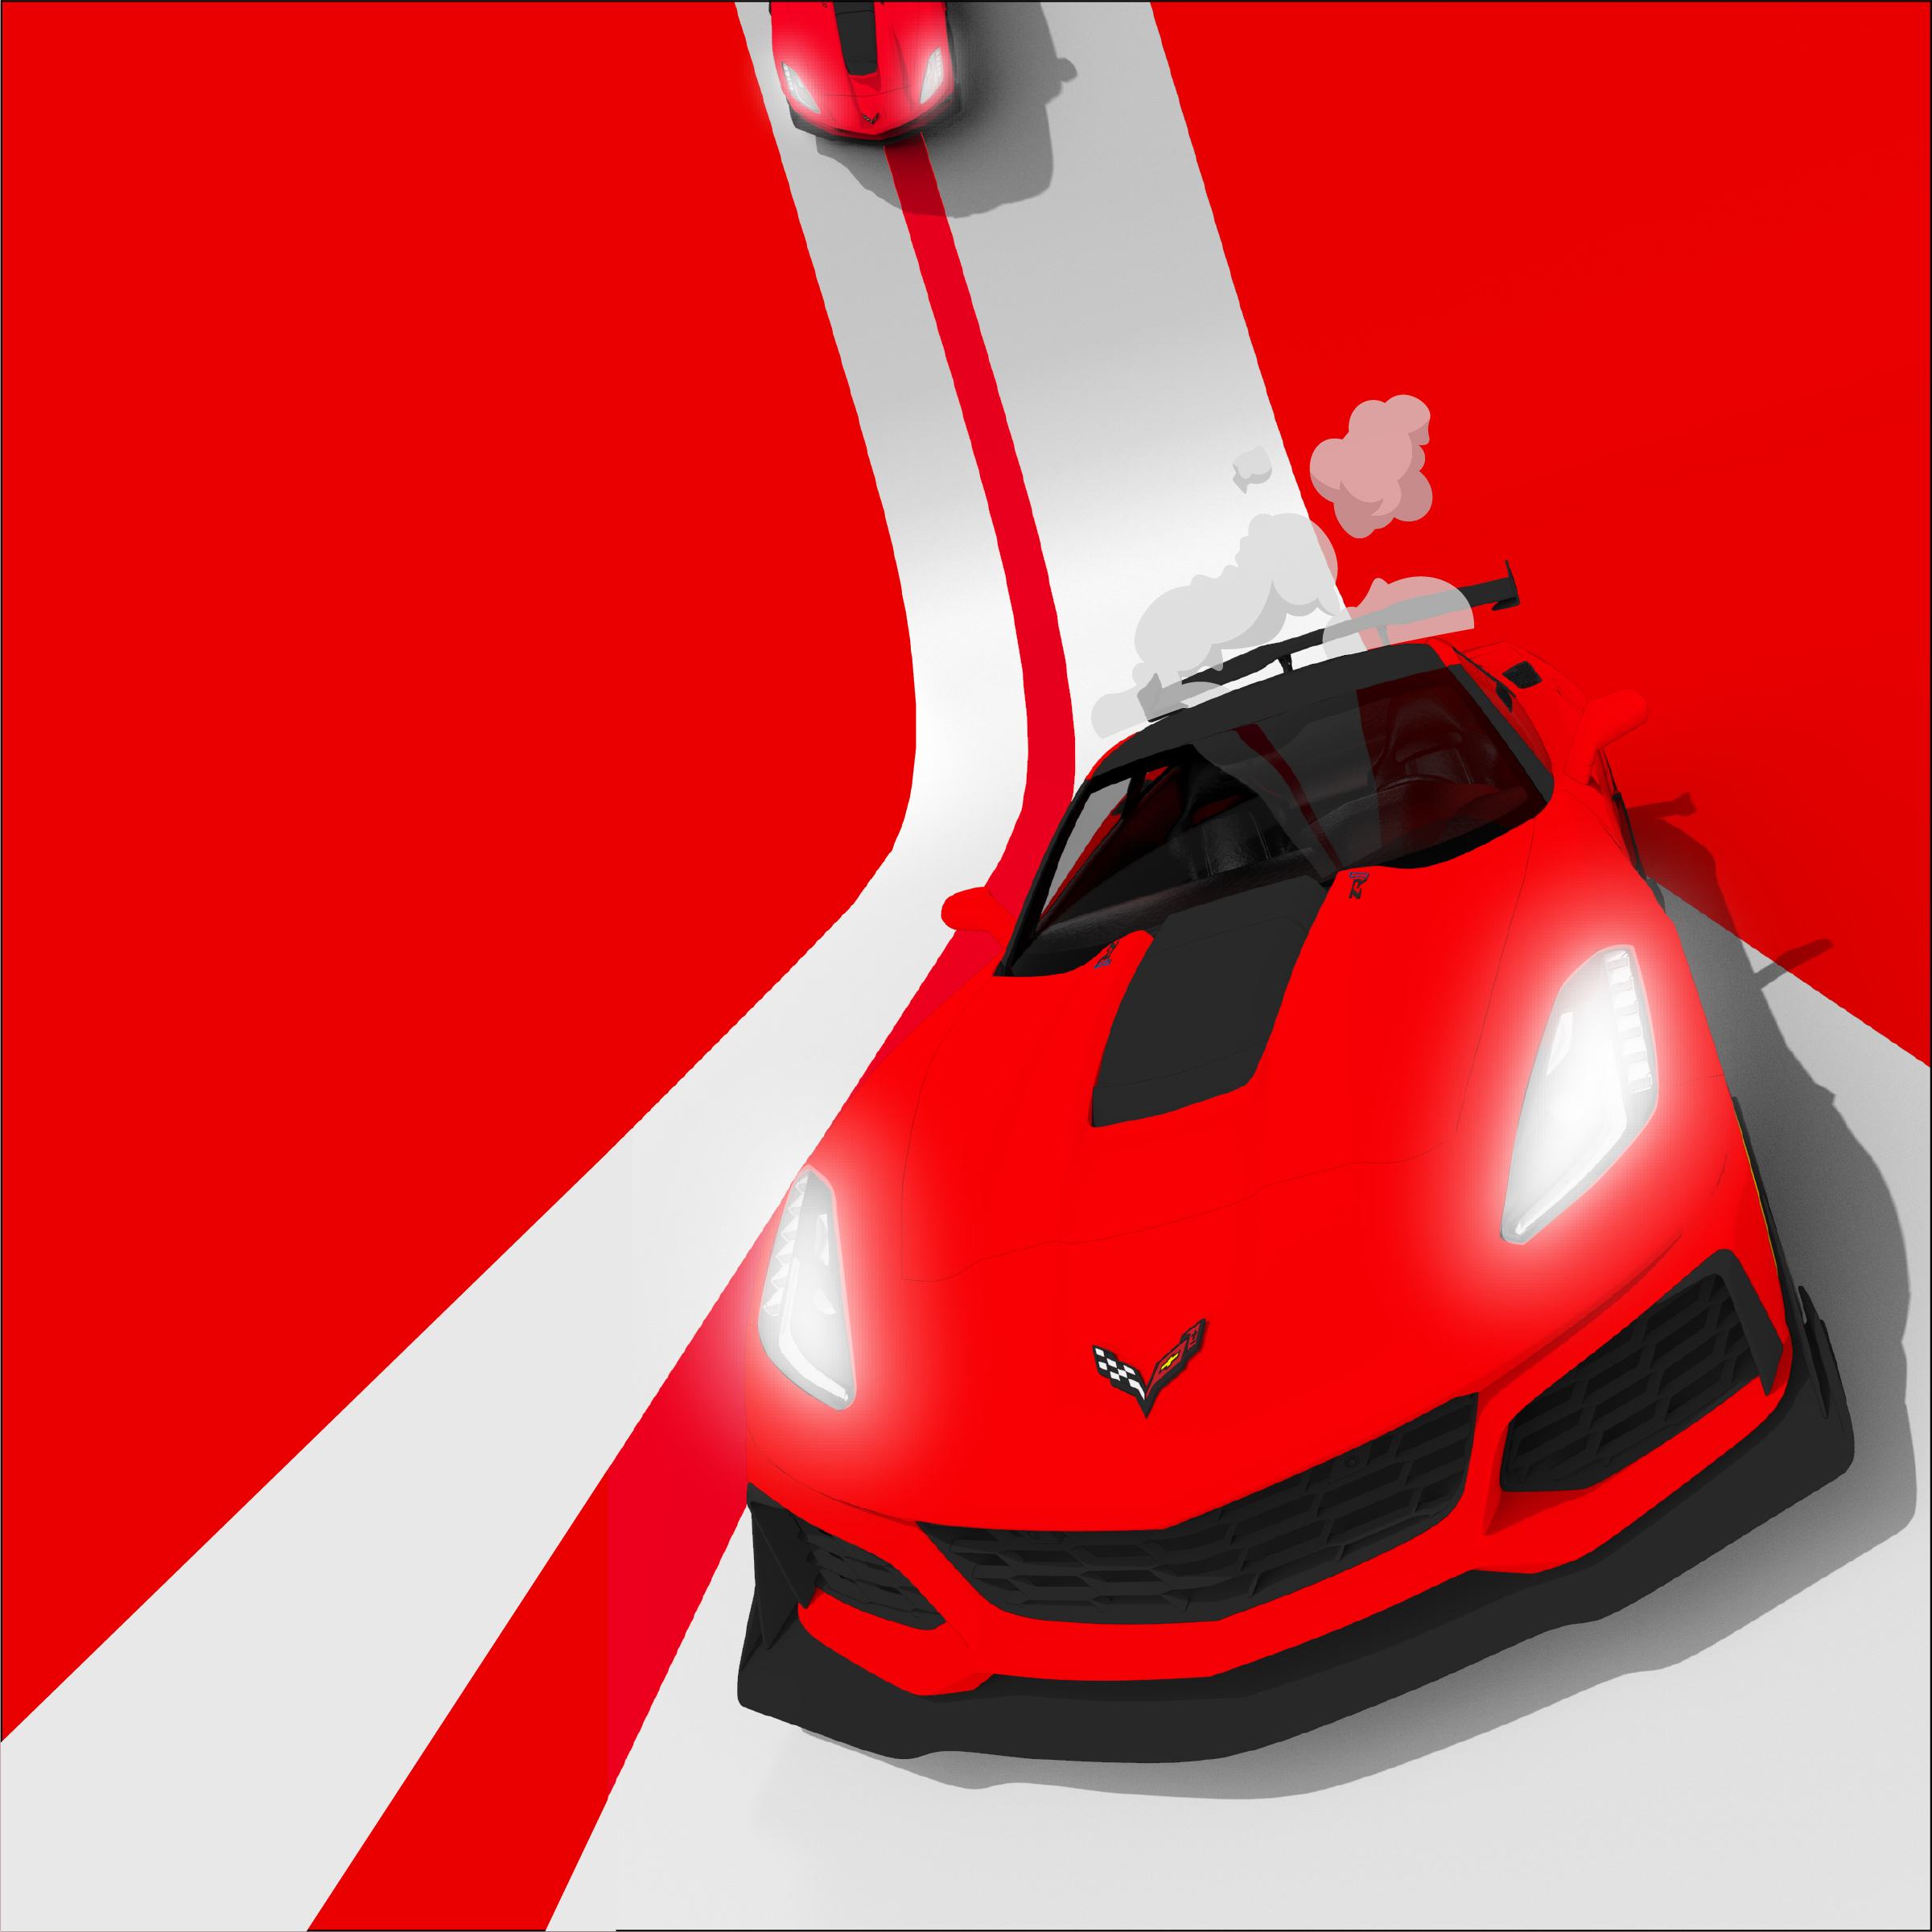 Corvette real drive - Sharper Image